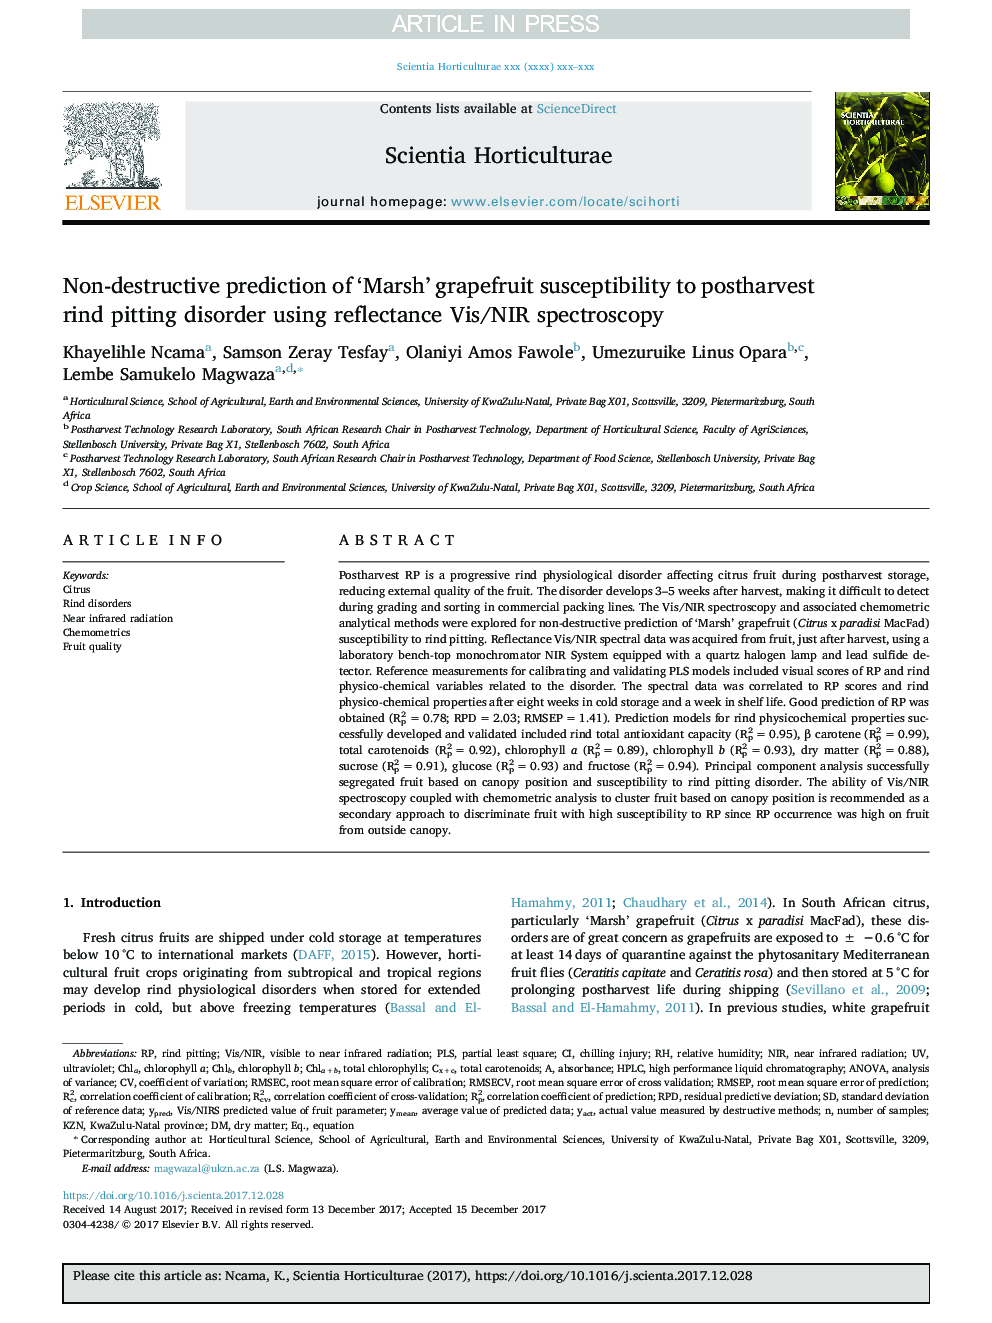 Non-destructive prediction of 'Marsh' grapefruit susceptibility to postharvest rind pitting disorder using reflectance Vis/NIR spectroscopy